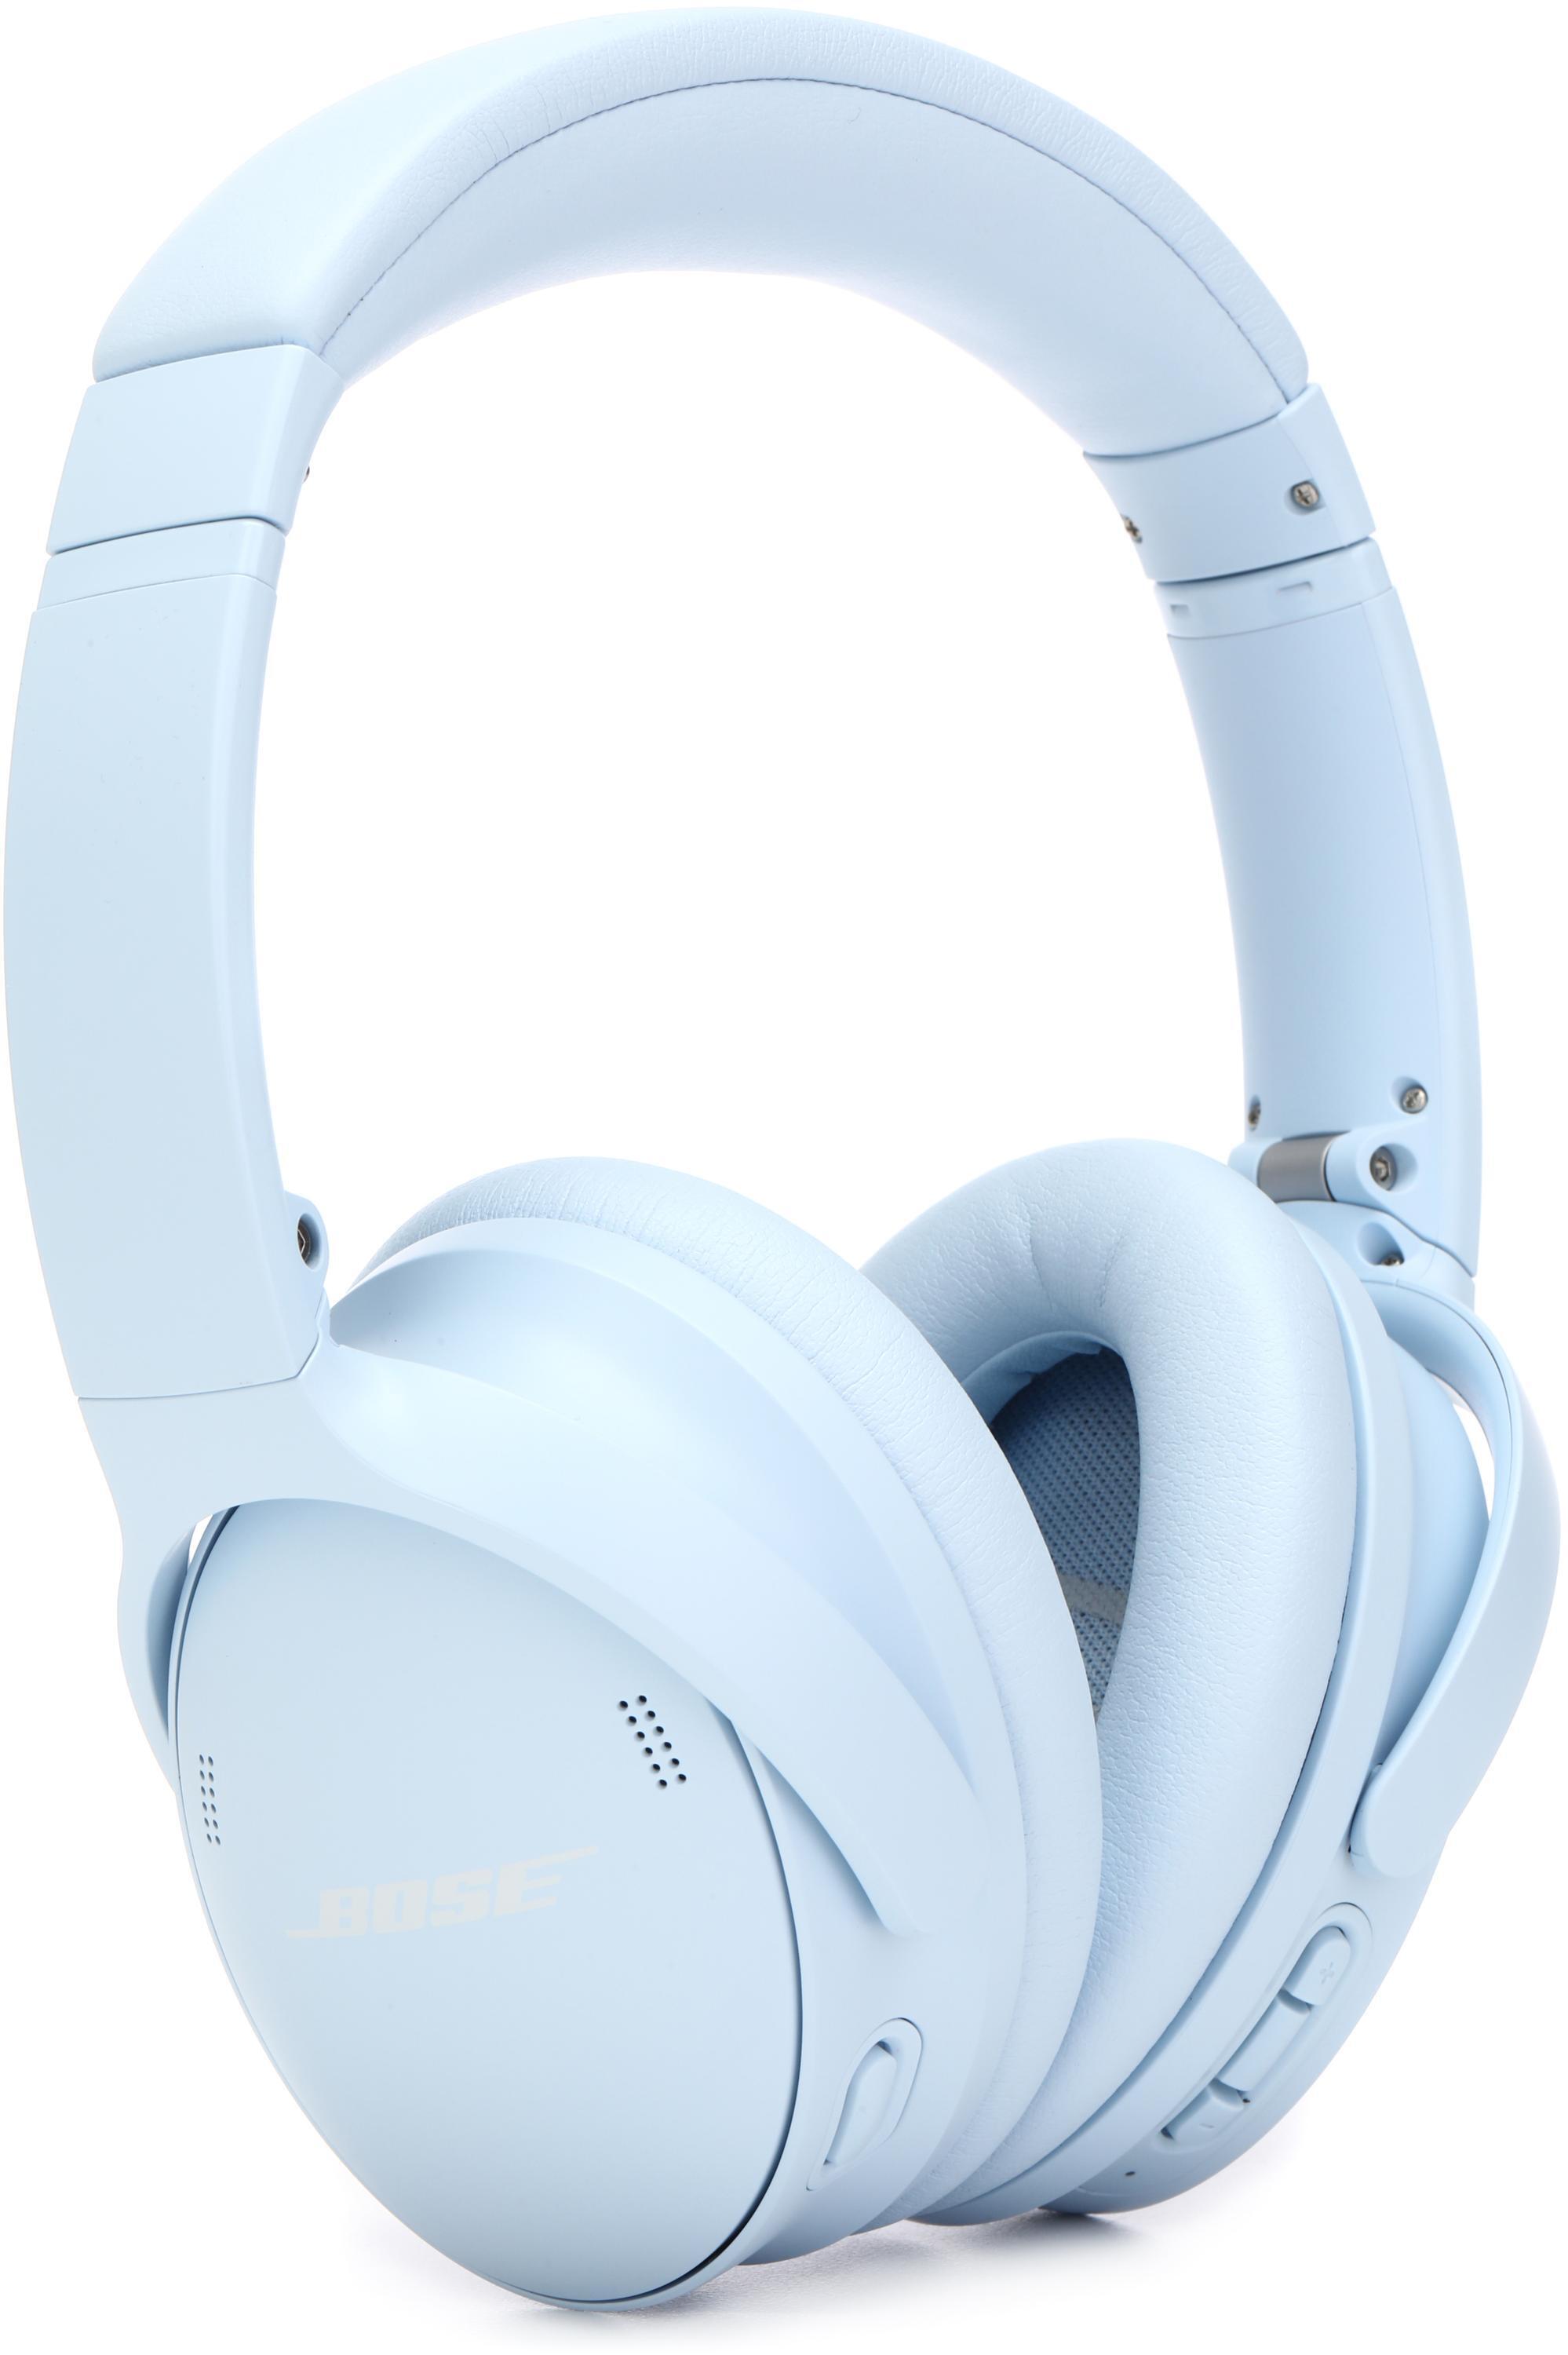 Bose QuietComfort Headphones - Moonstone Blue